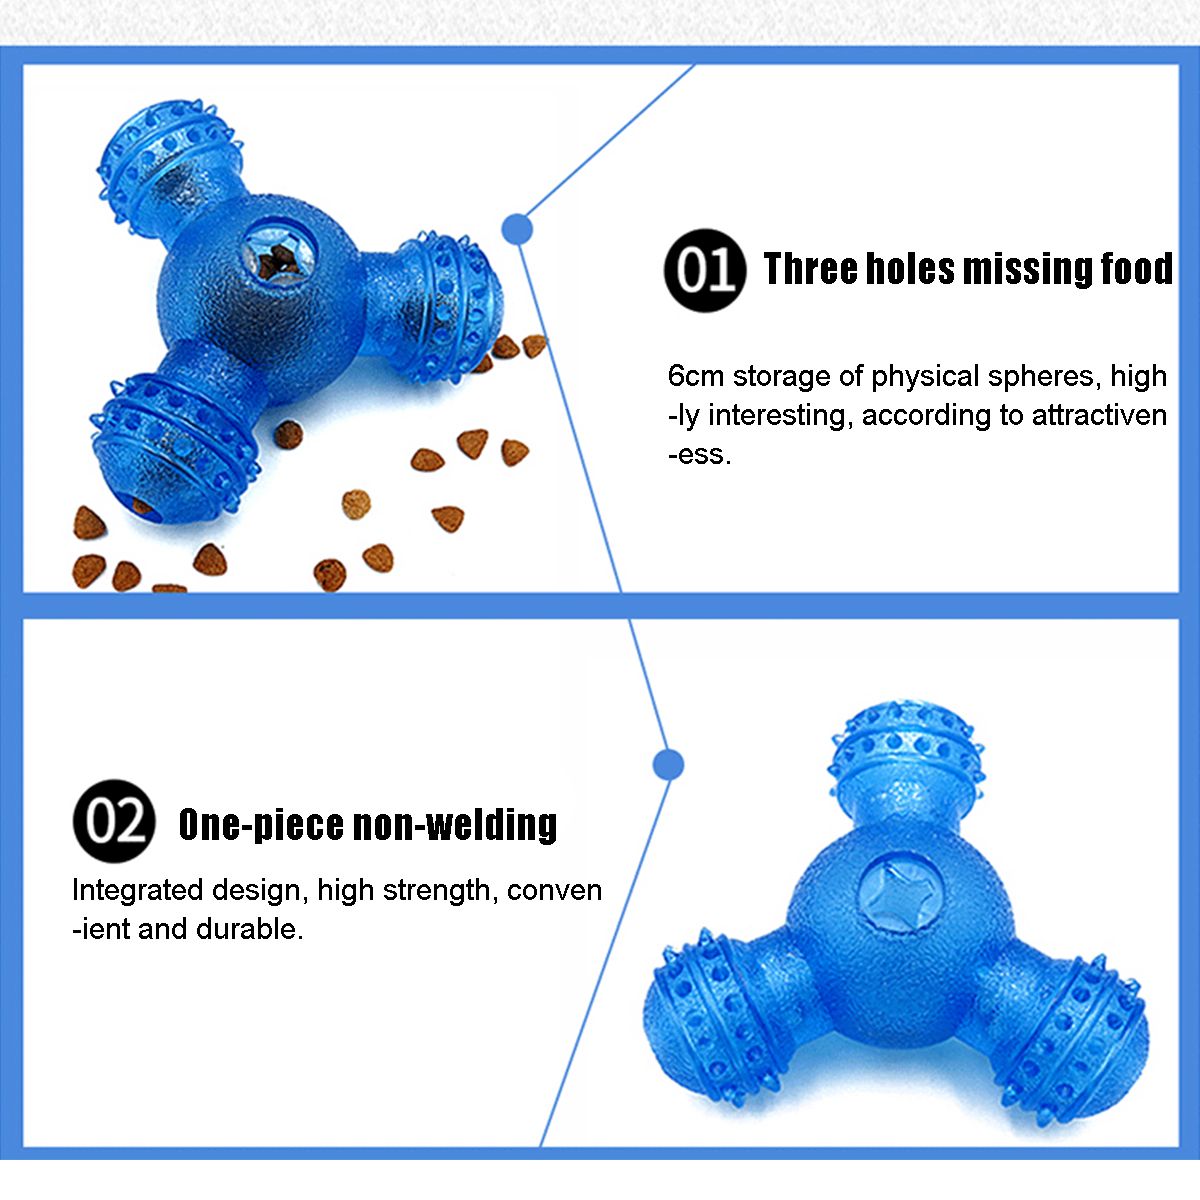 Three-Hole-Pet-Dog-Toys-Interactive-Feeder-Ball-Portable-Feeding-Chew-Food-1613088